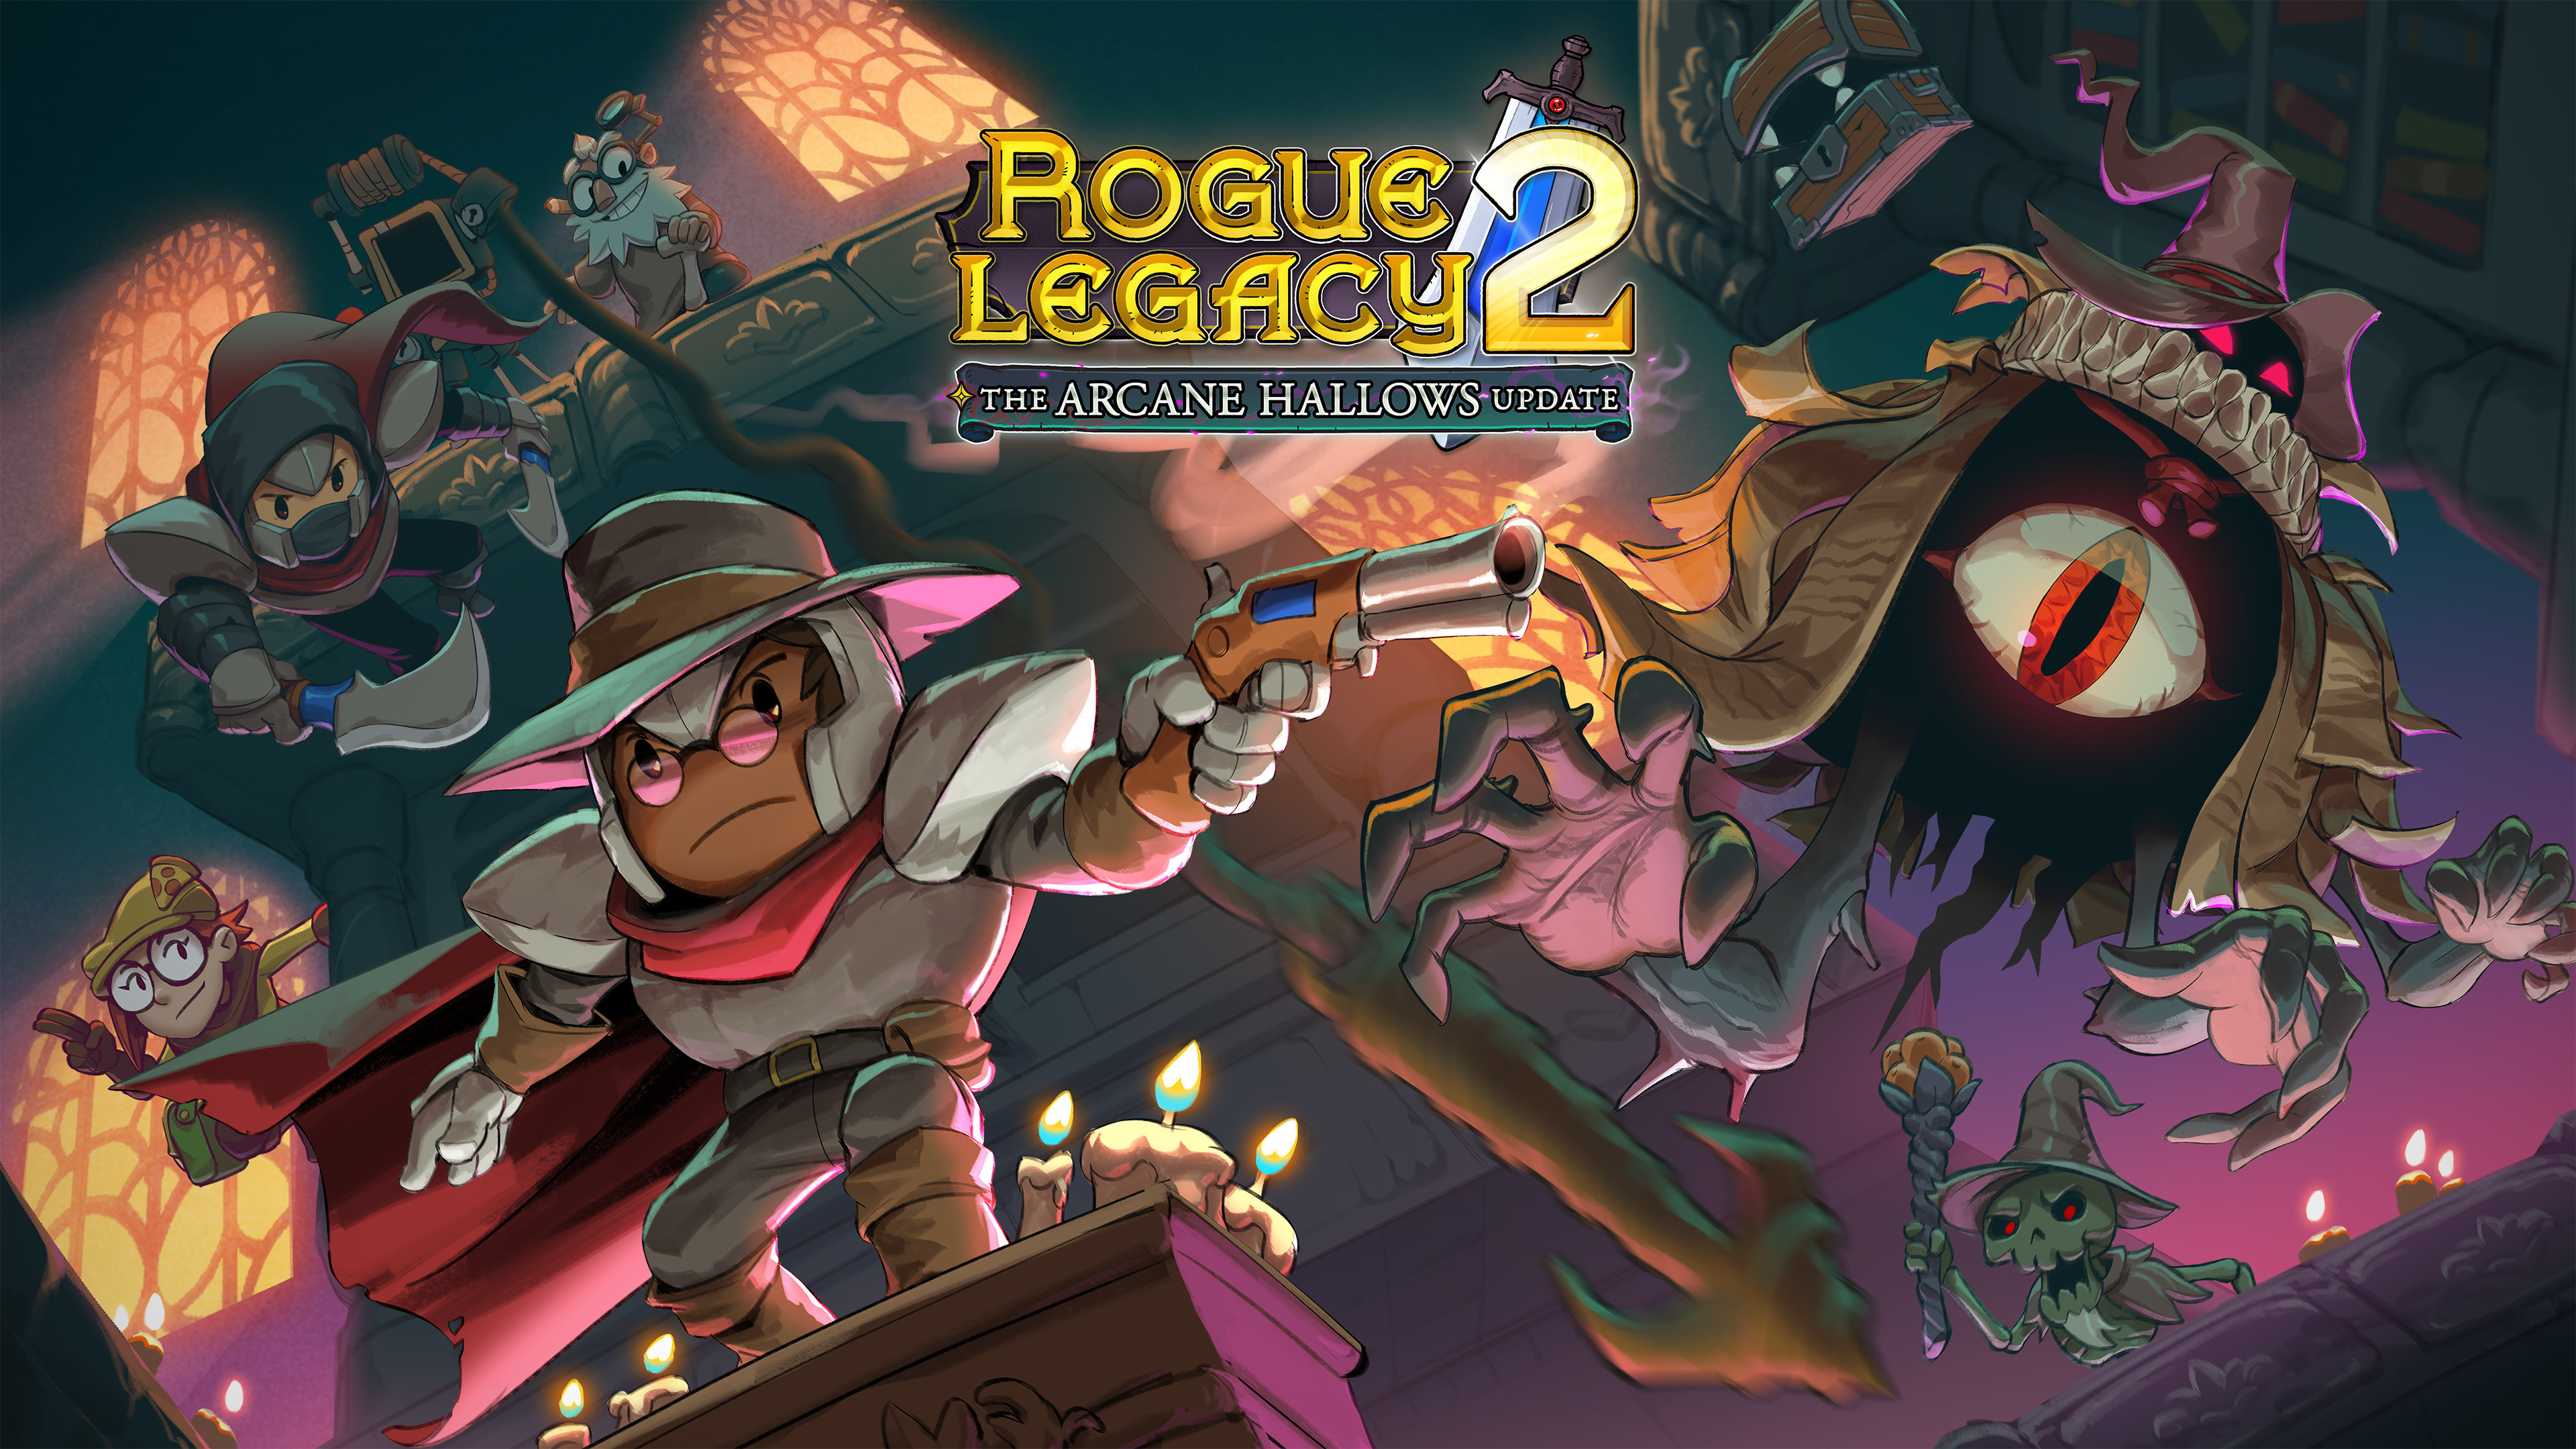 Rogue Legacy 2 4k Ultra HD Wallpaper